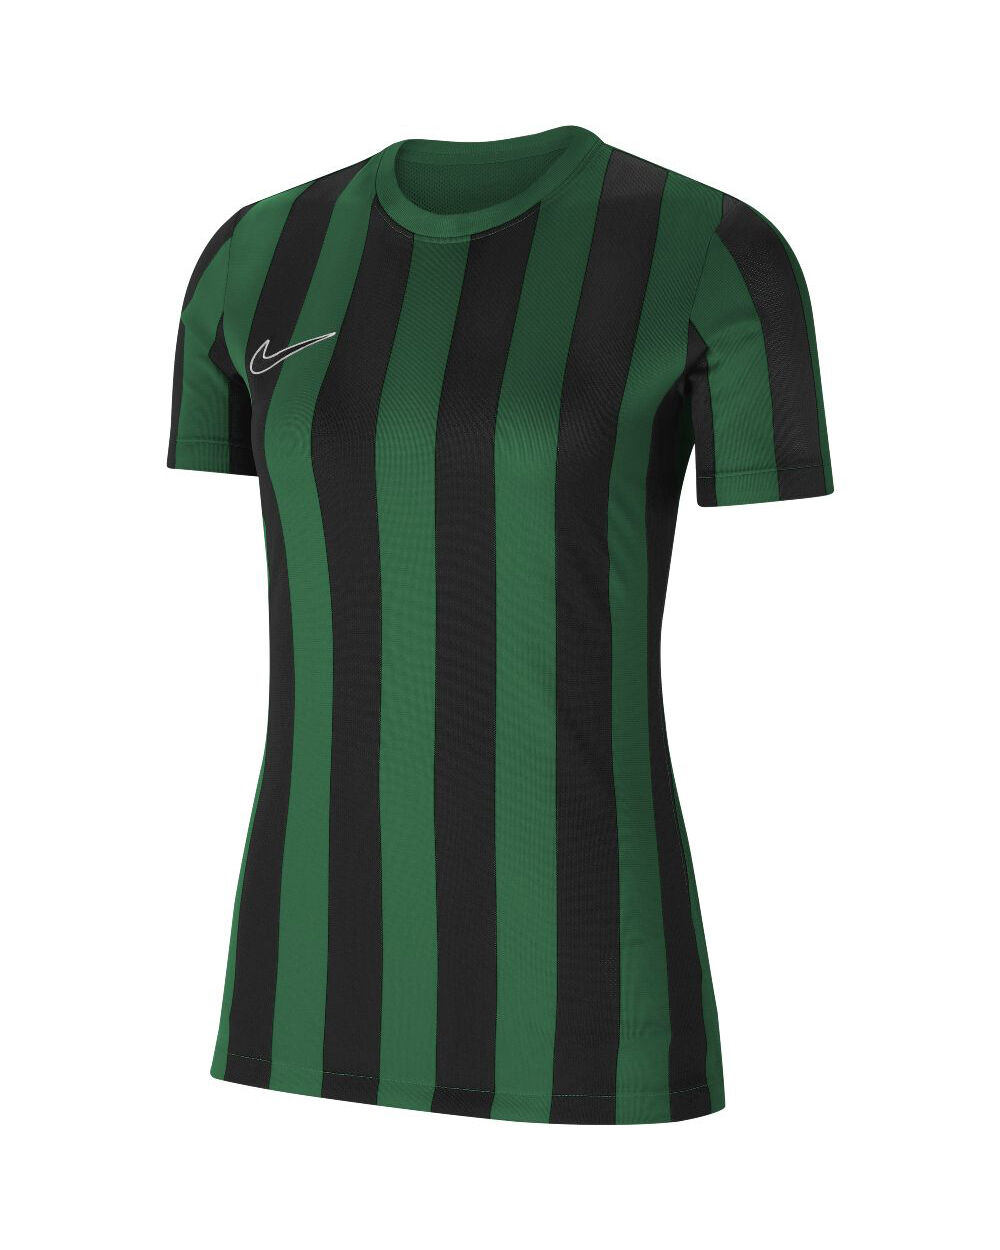 Camiseta Nike Striped Division IV Verde y Negro para Mujeres - CW3816-302